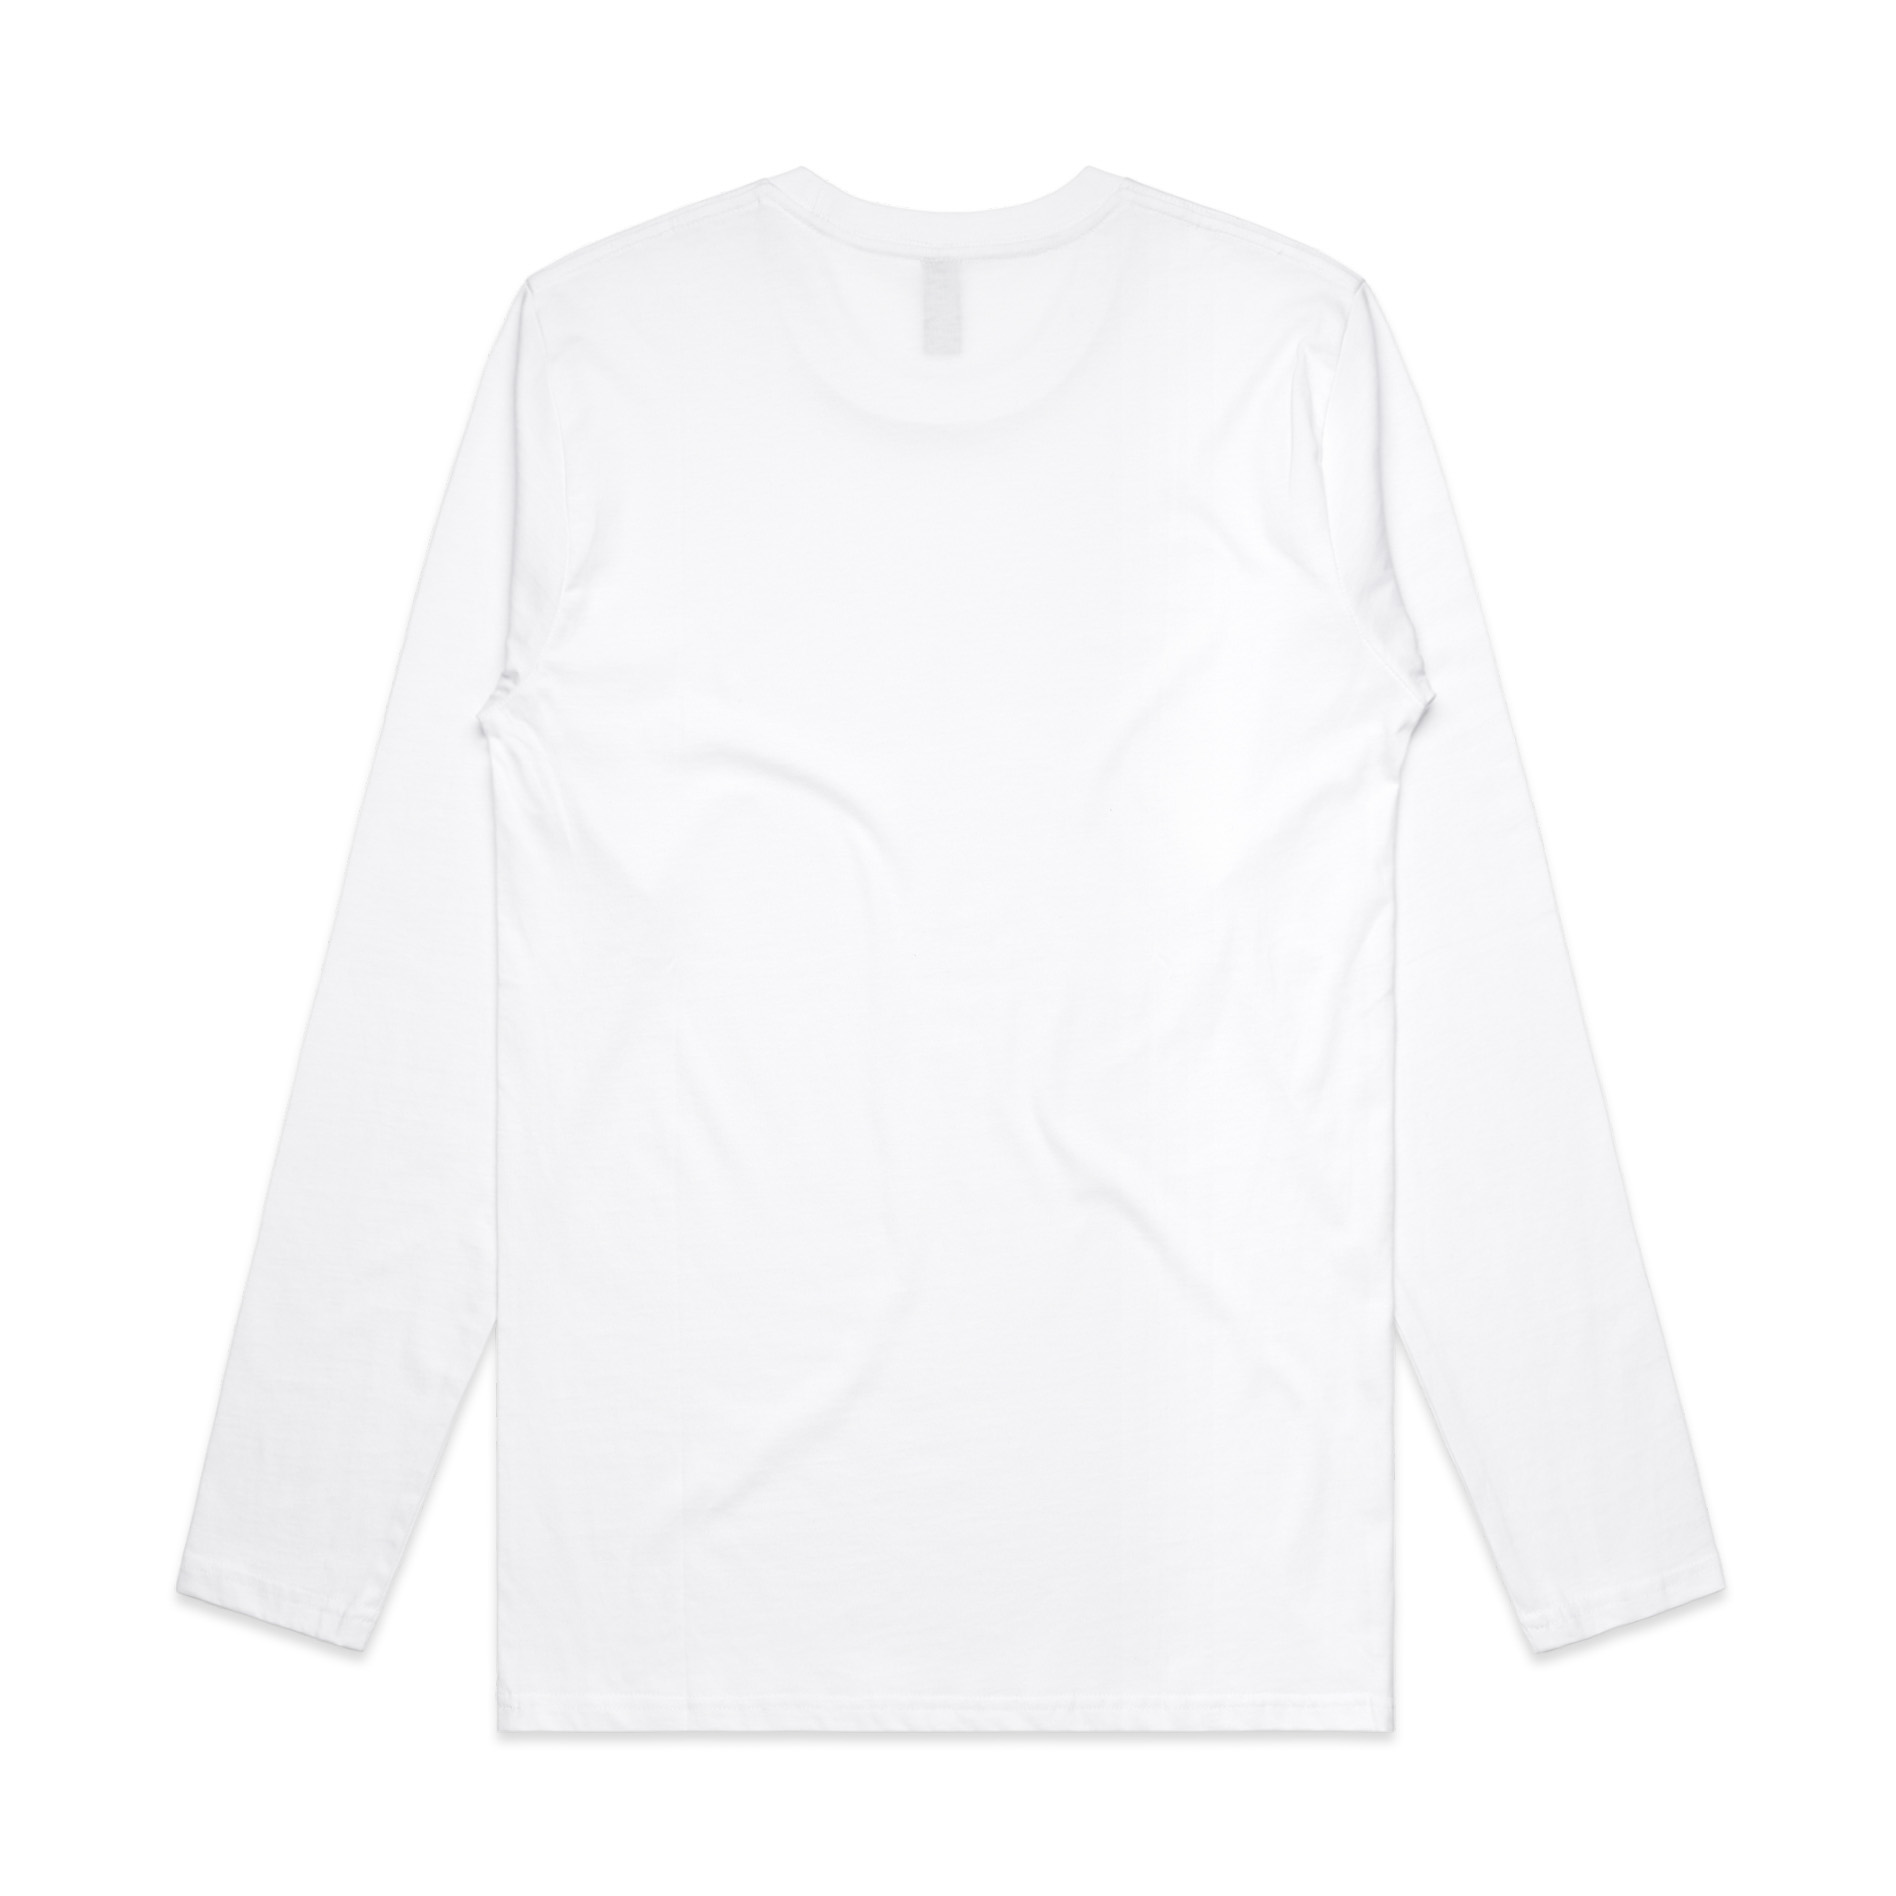 Men's AS Colour Ink Long Sleeve Tee - White - Uniform Edit